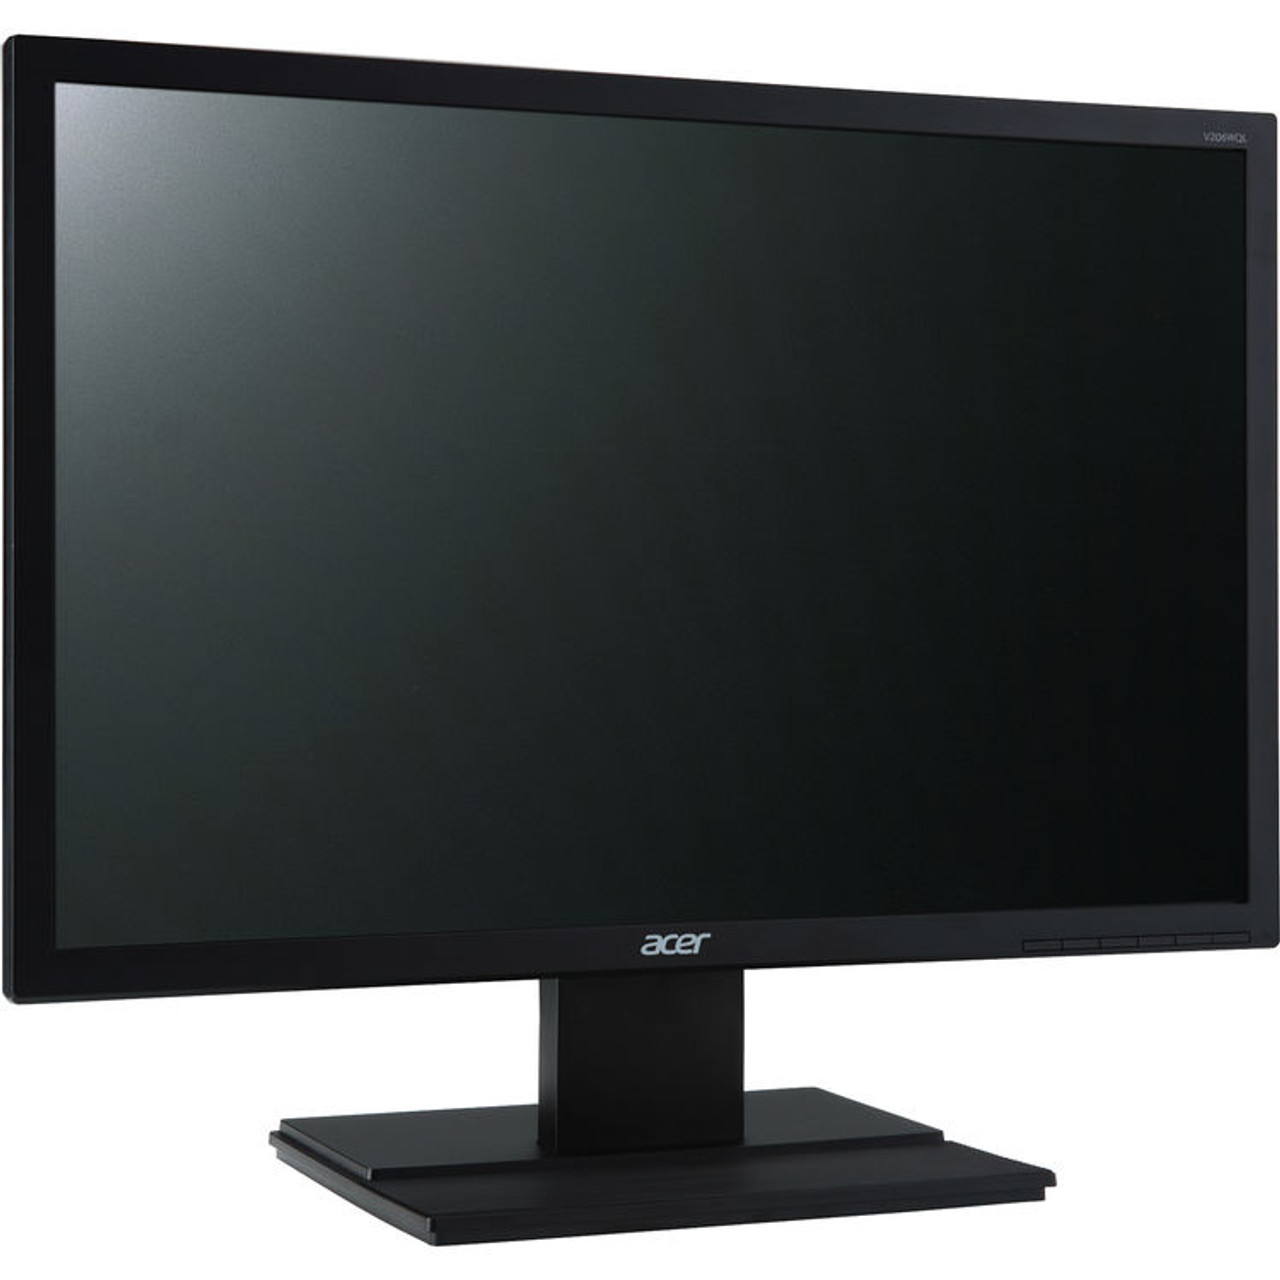 Acer 19.5" Widescreen Monitor 5ms IPS 16:10 WXGA 1440x900 | Refurbished